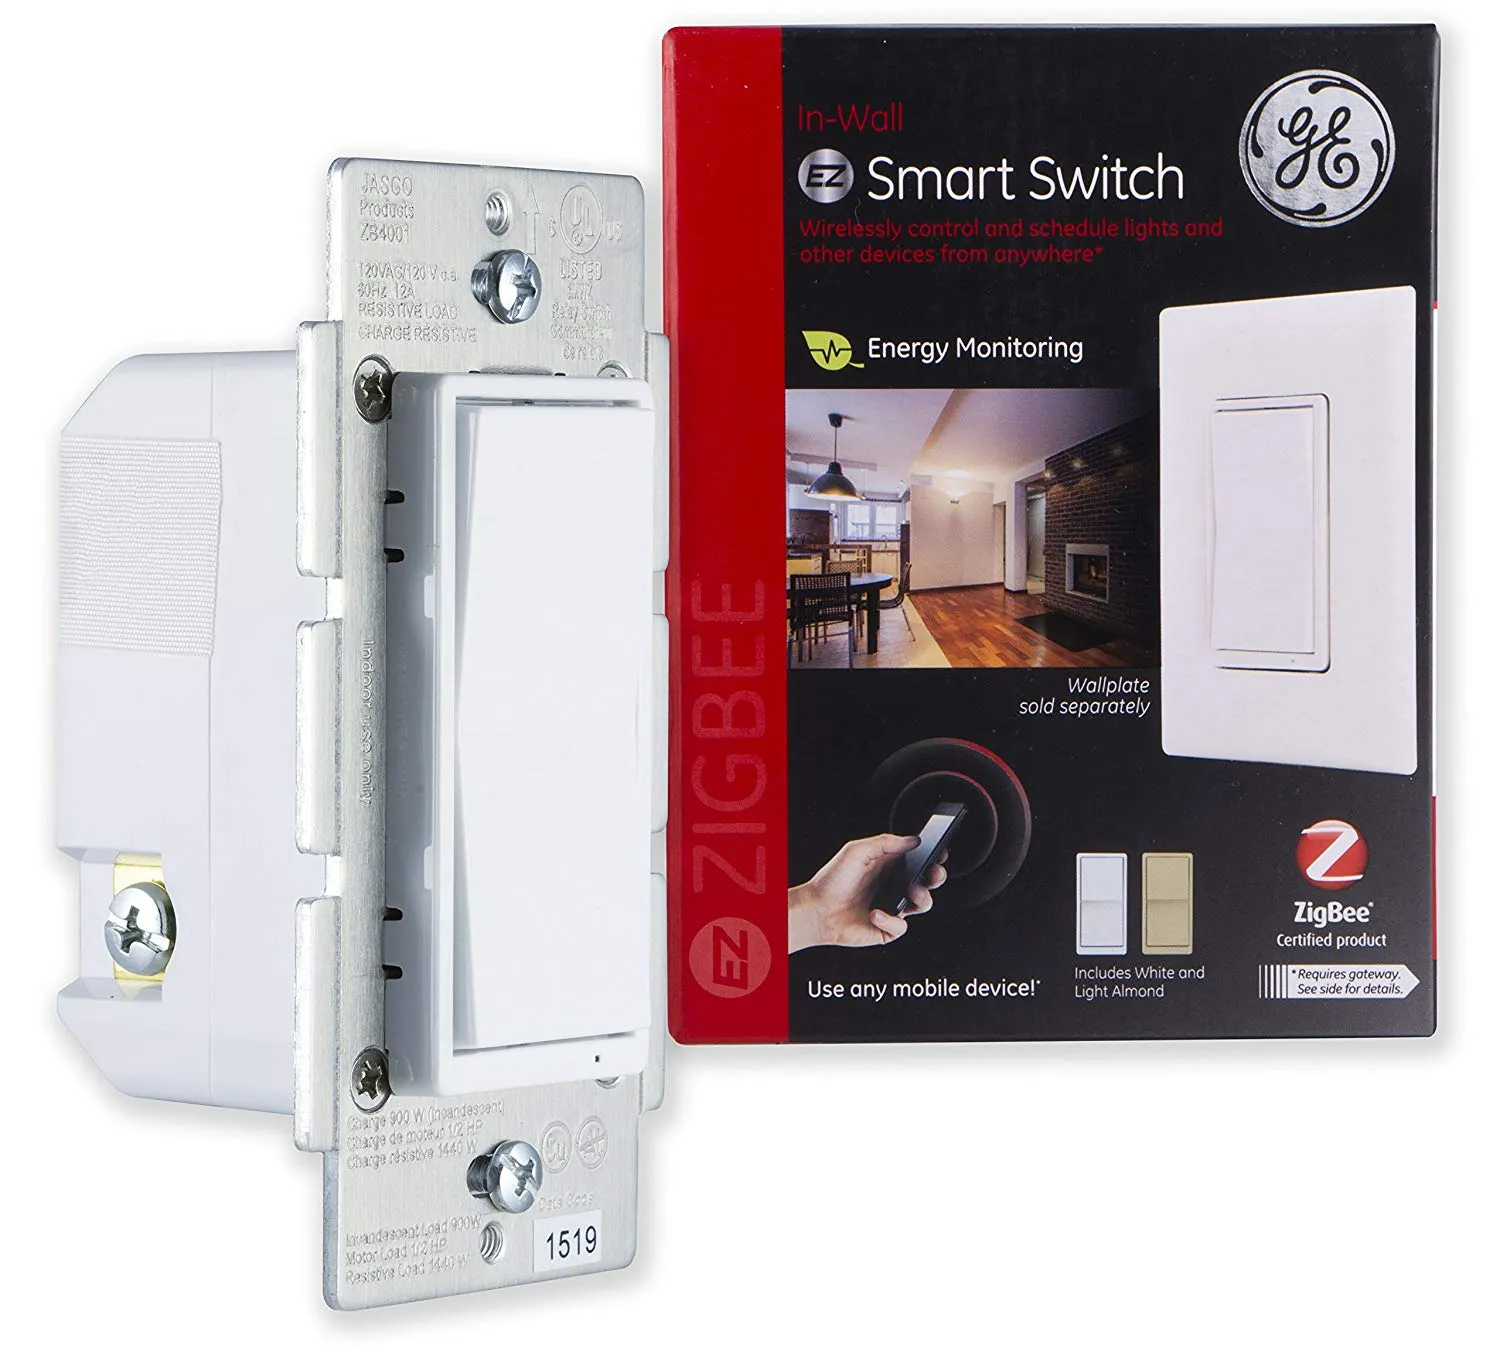 In-Wall Smart Switch